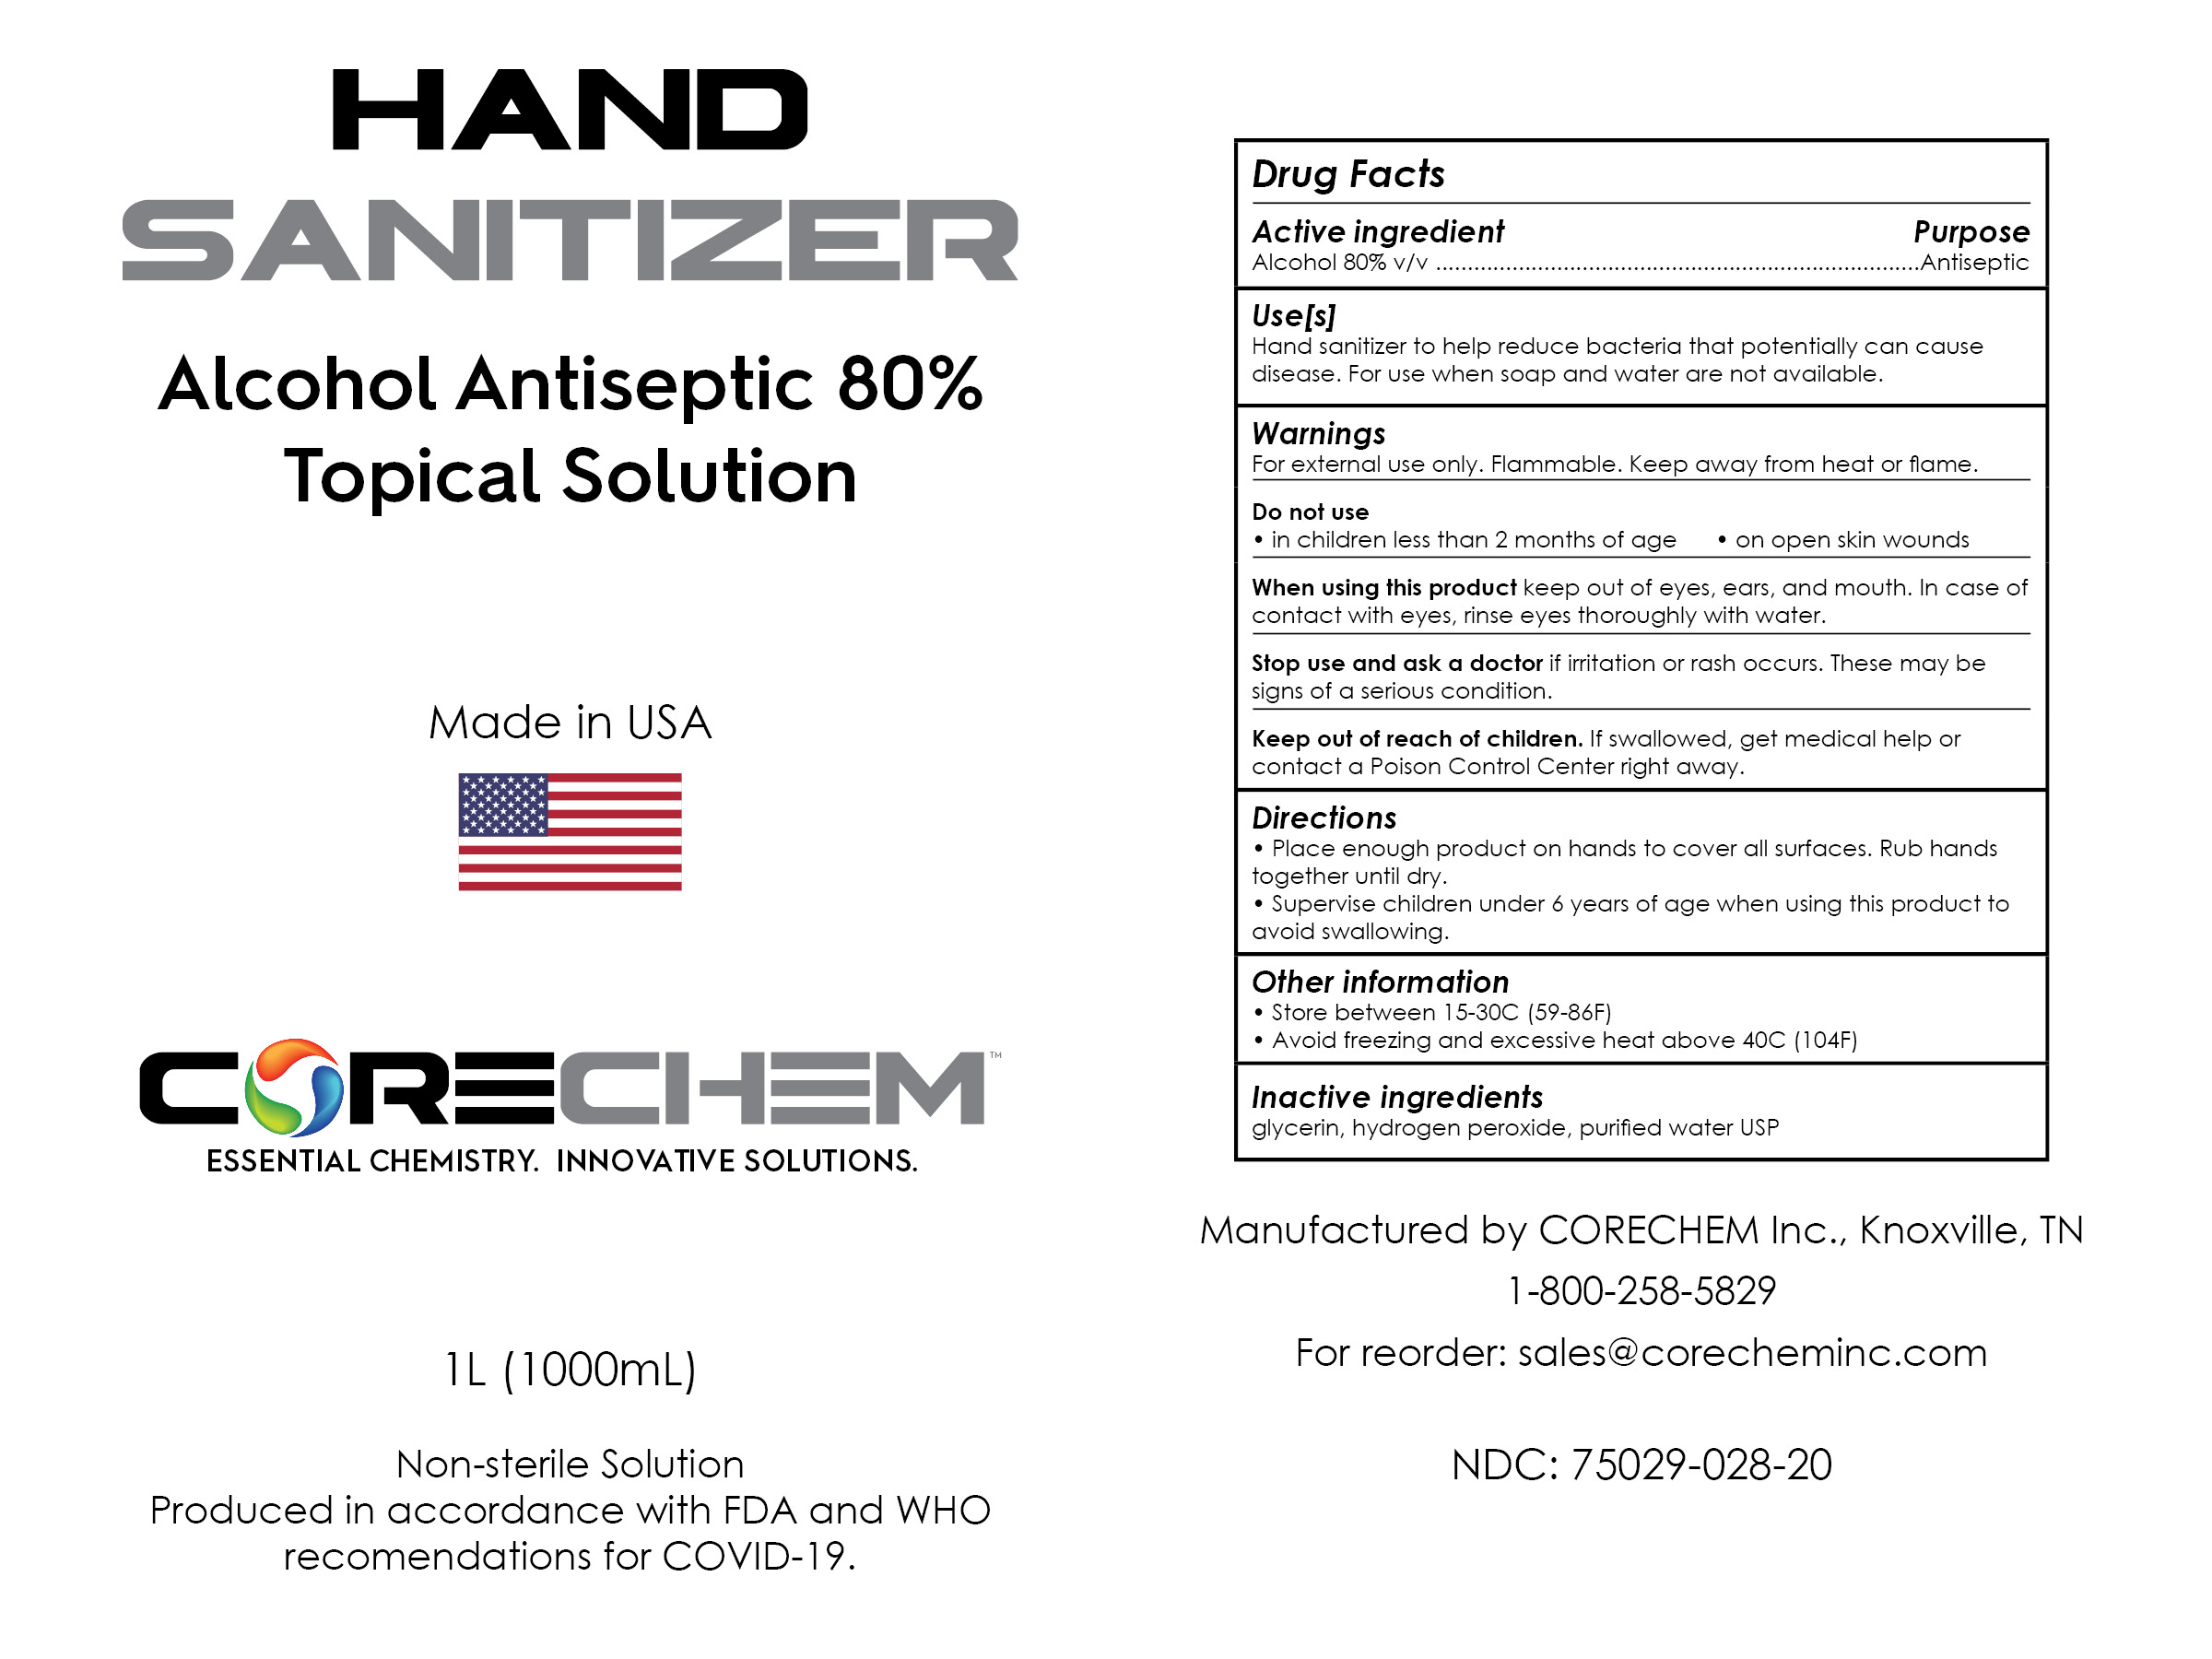 CORECHEM - Hand Sanitizer - 1000 mL / 1 L